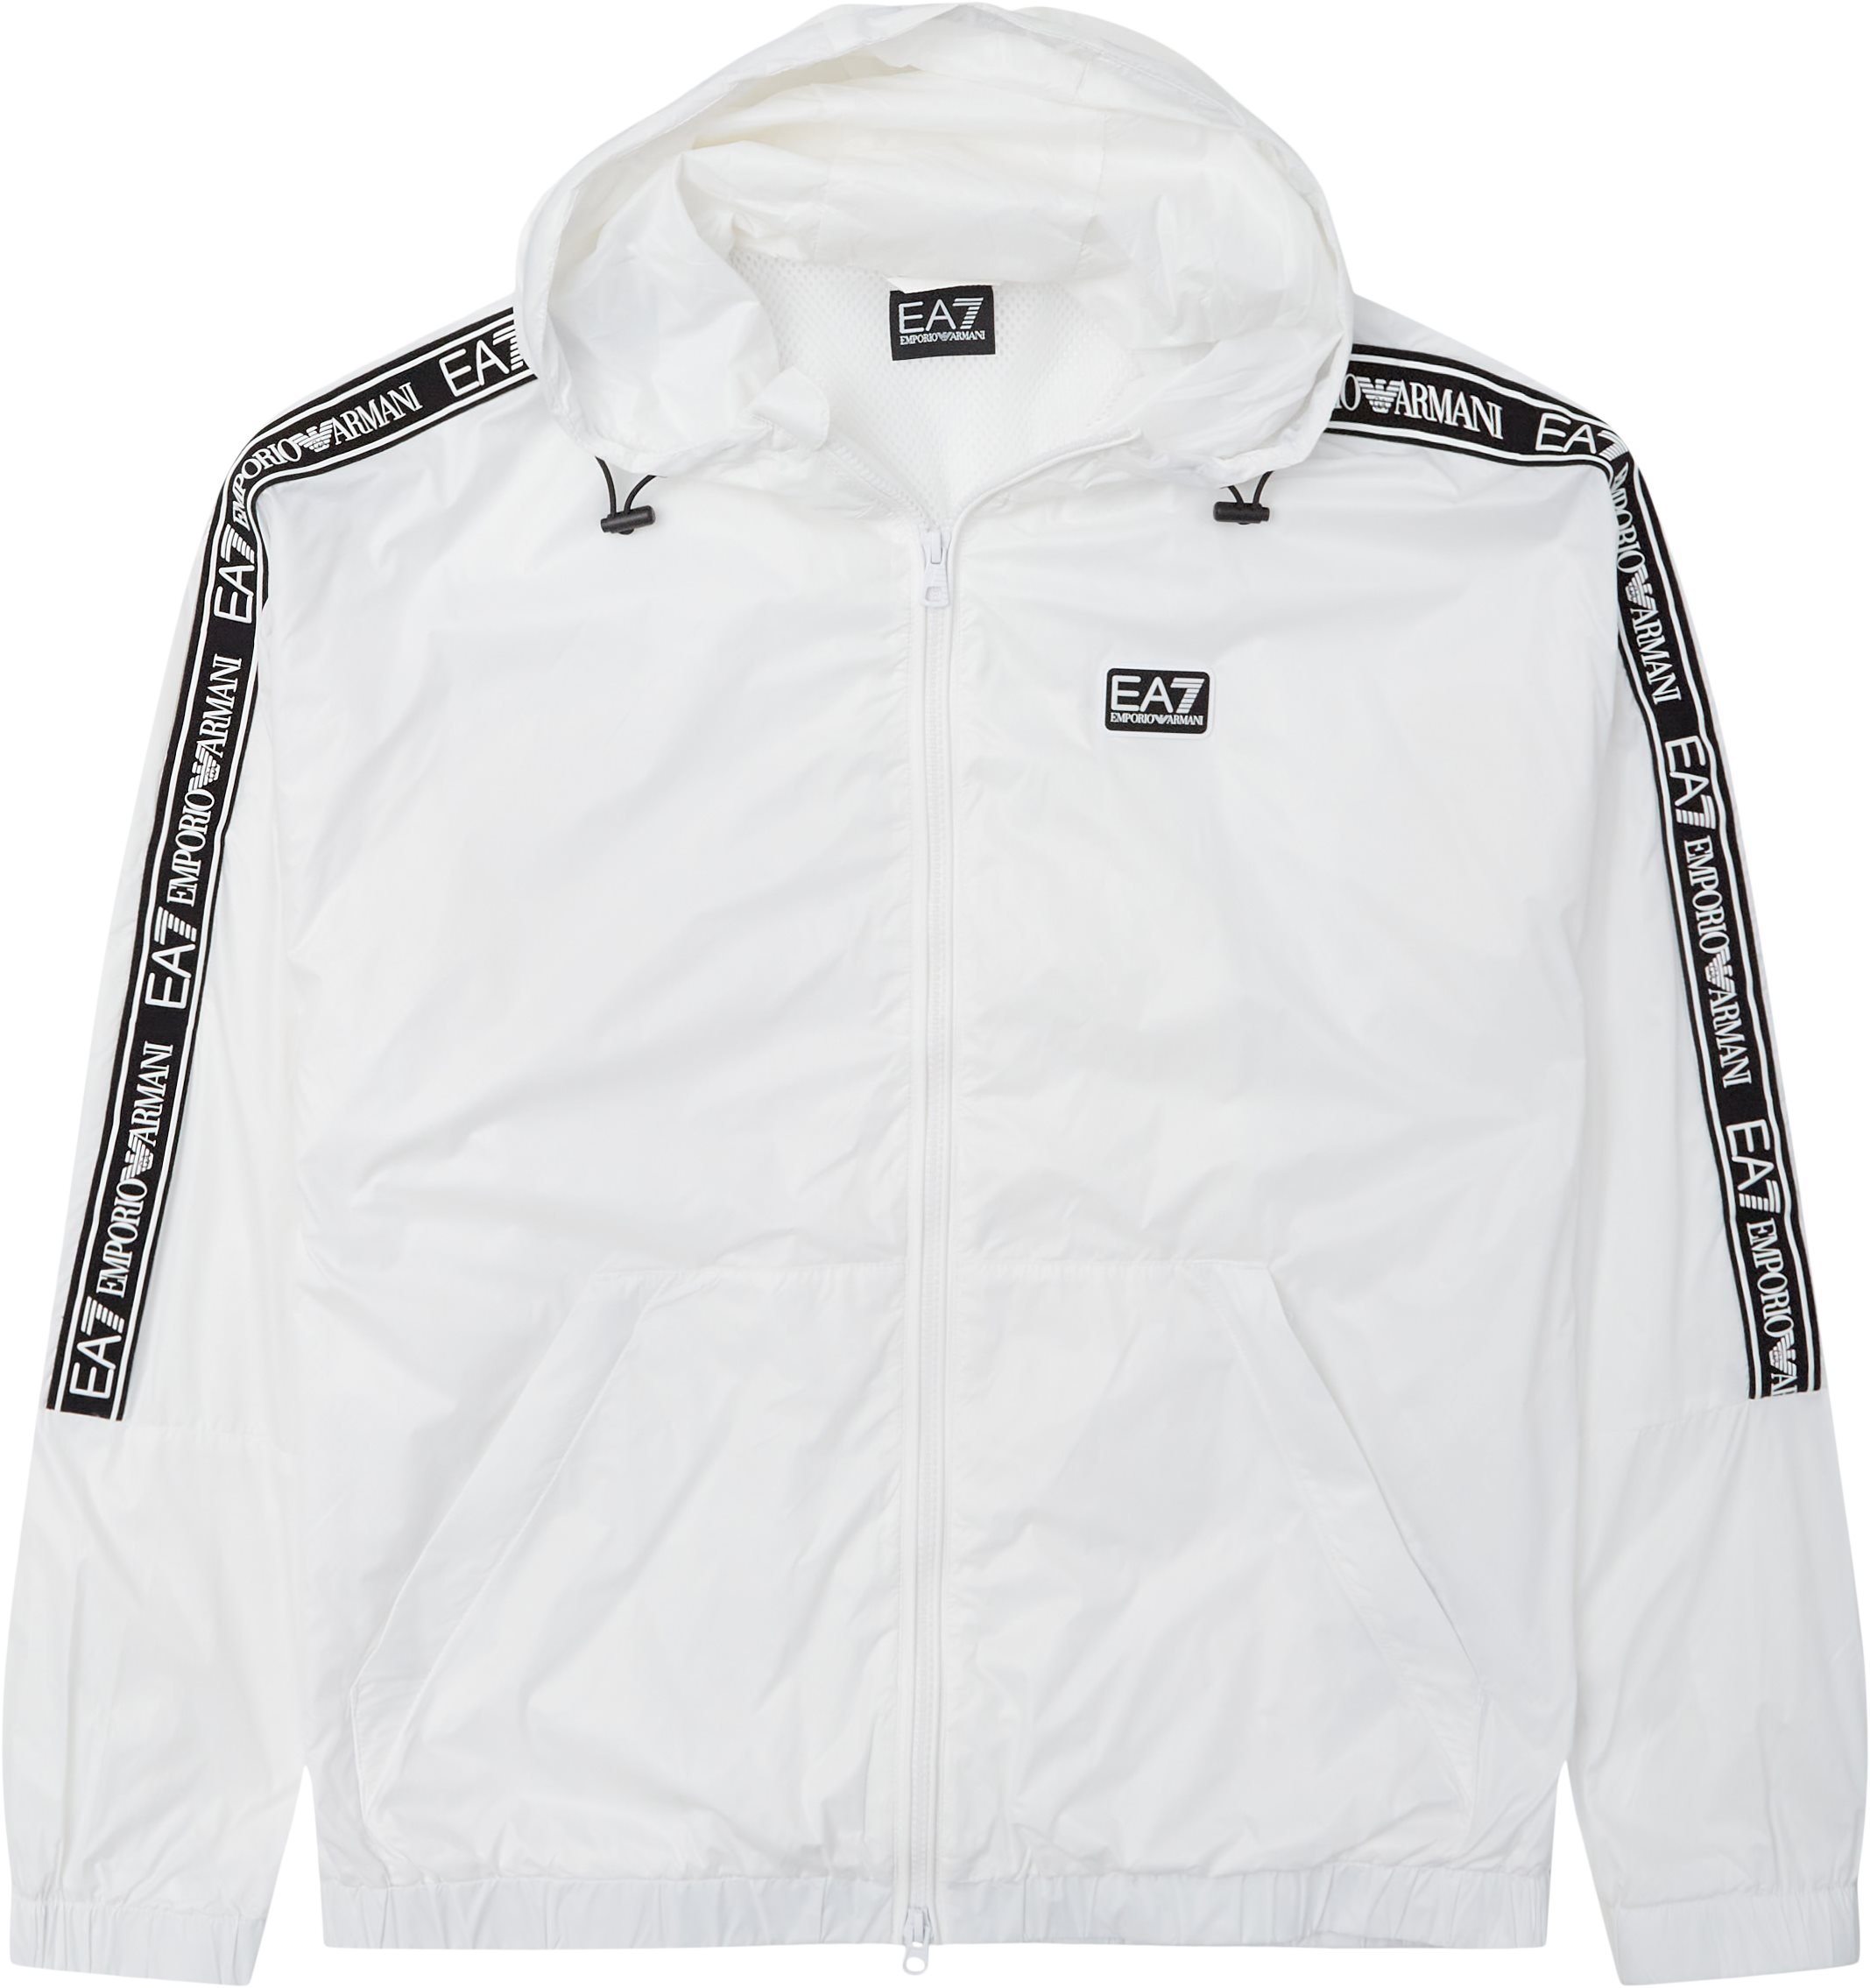 Pnr4z-3lpb29 - Jackets - Regular fit - White